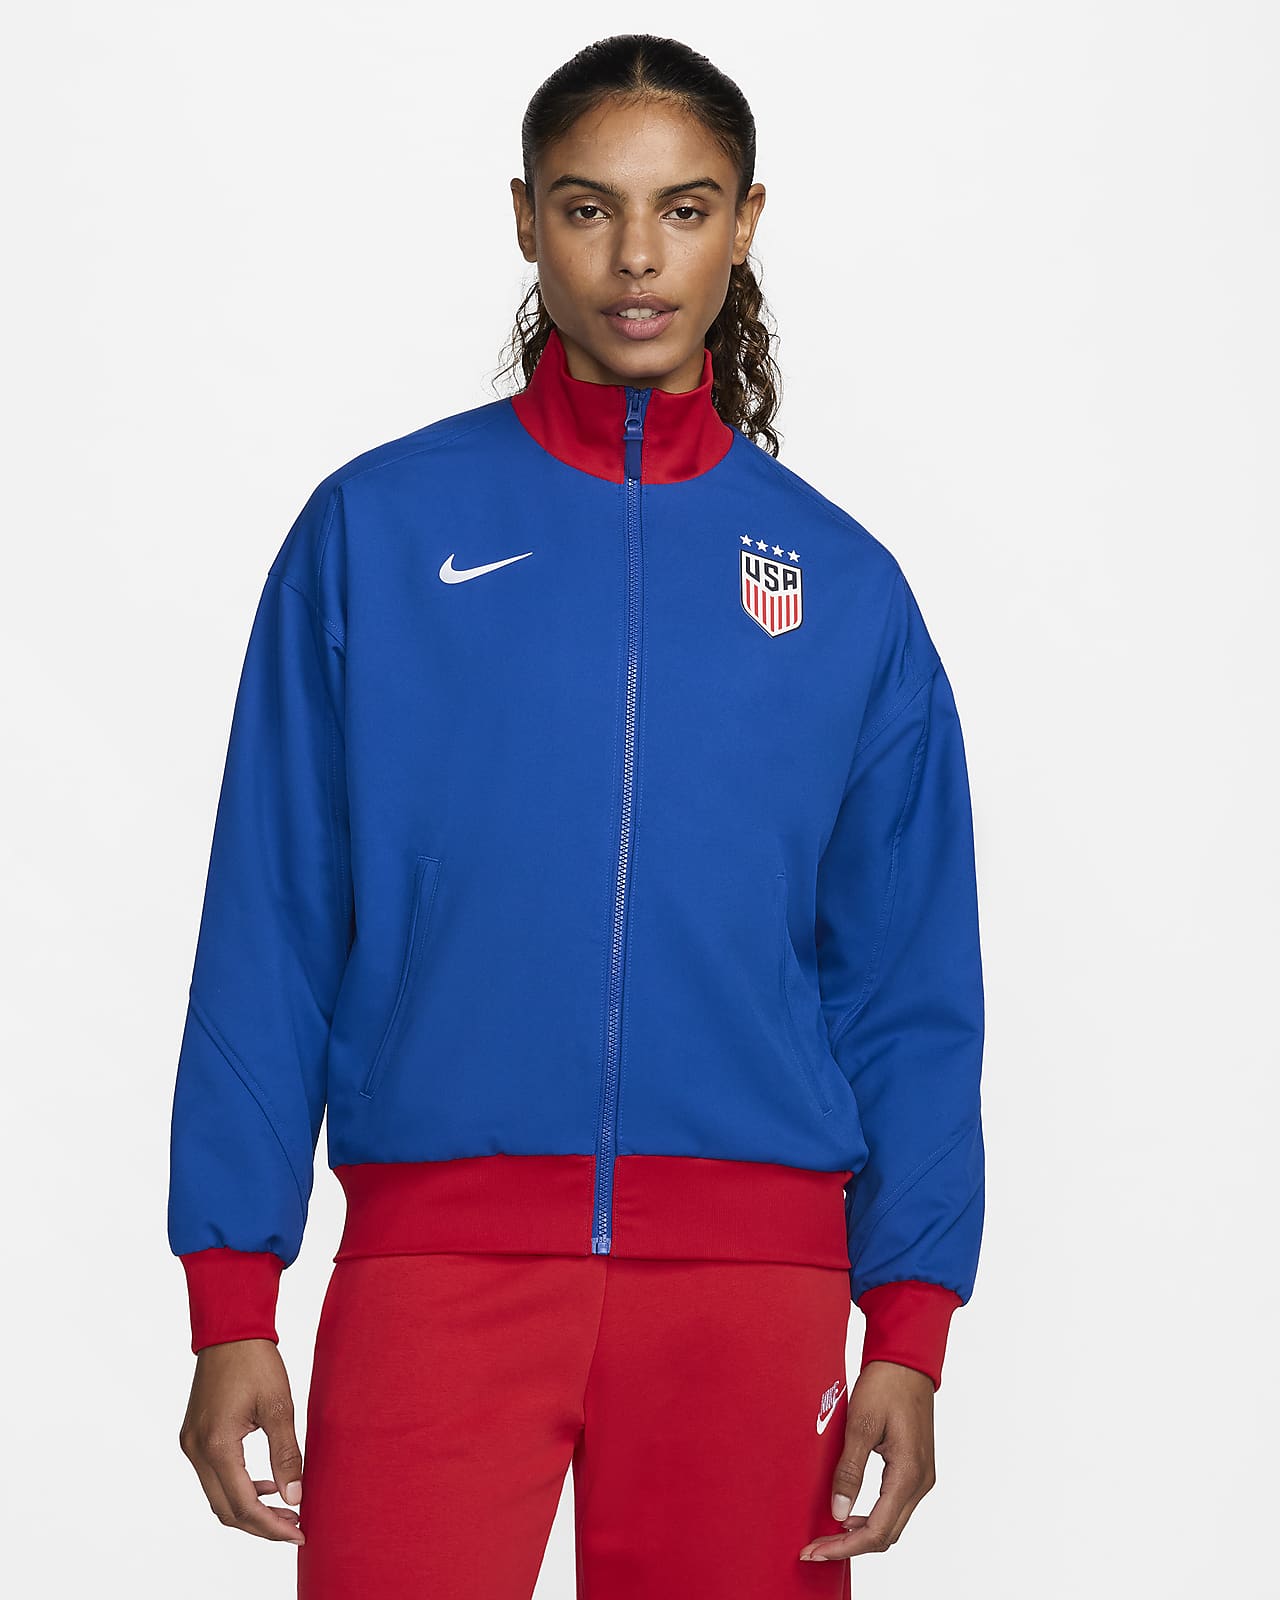 Chamarra de fútbol Nike Dri-FIT para mujer Selección nacional de fútbol masculino de Estados Unidos Strike